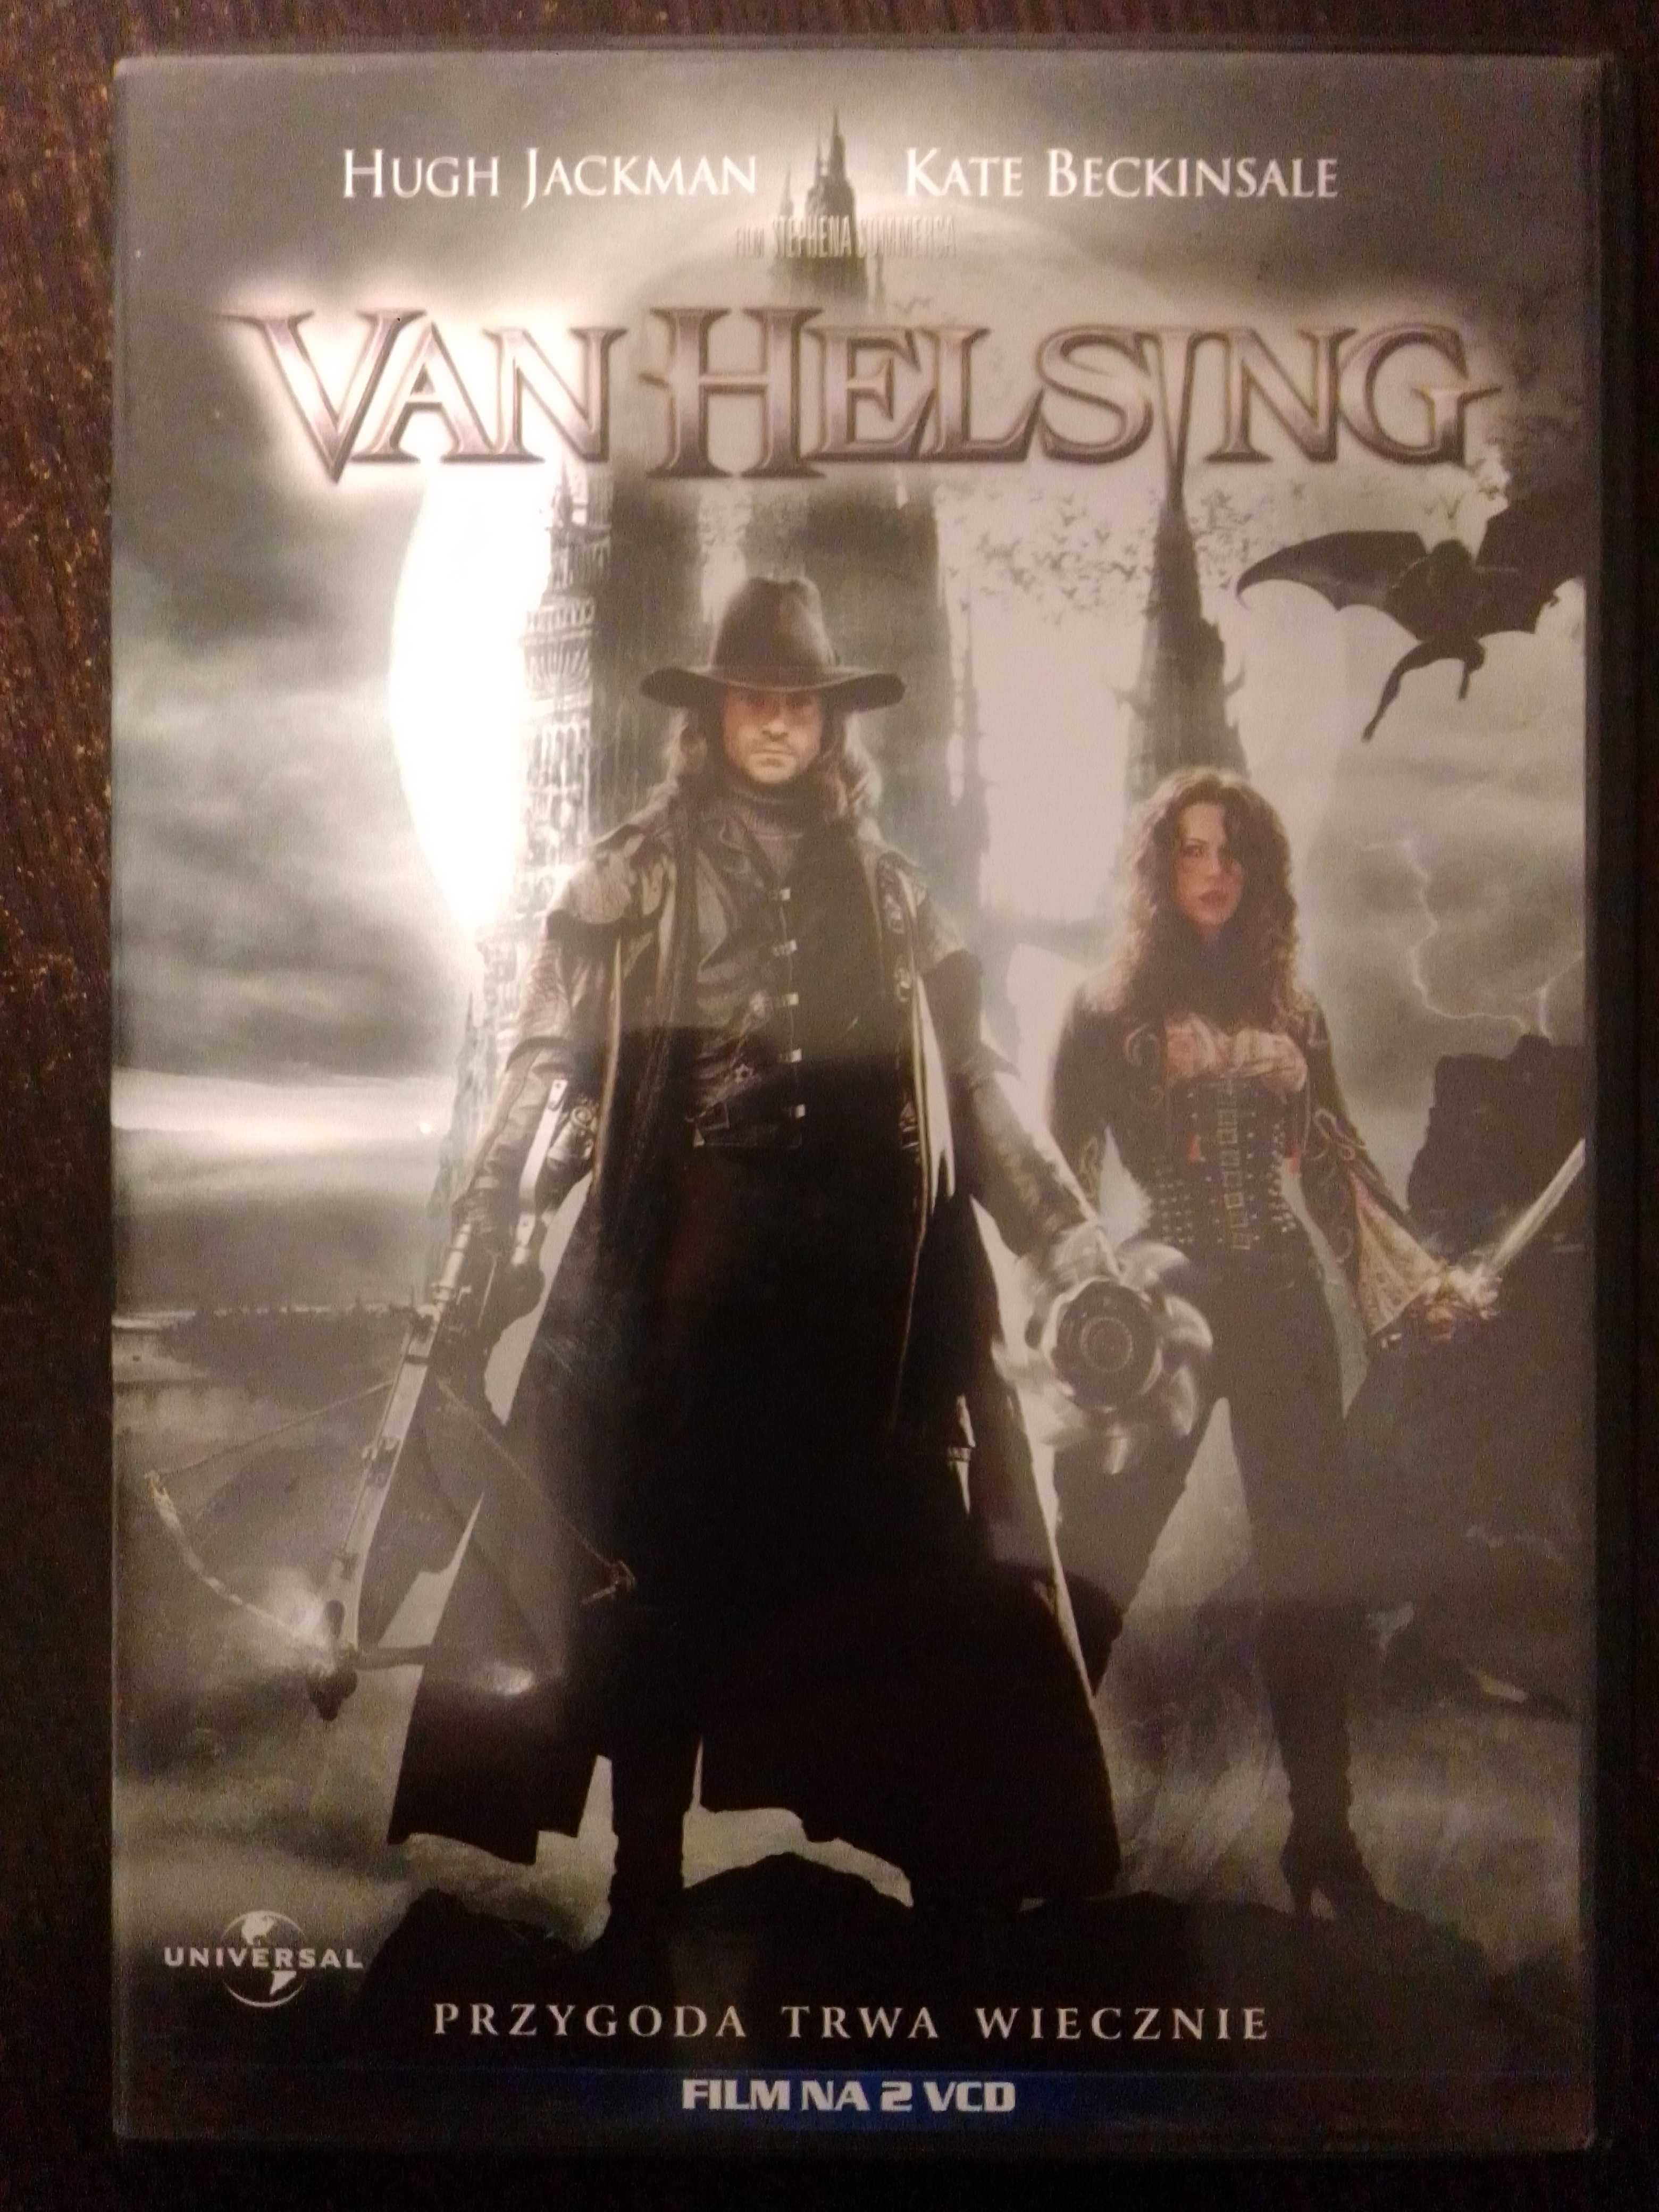 Van Helsing VCD 2004 wys. Kate Beckinsale, Hugh Jackman